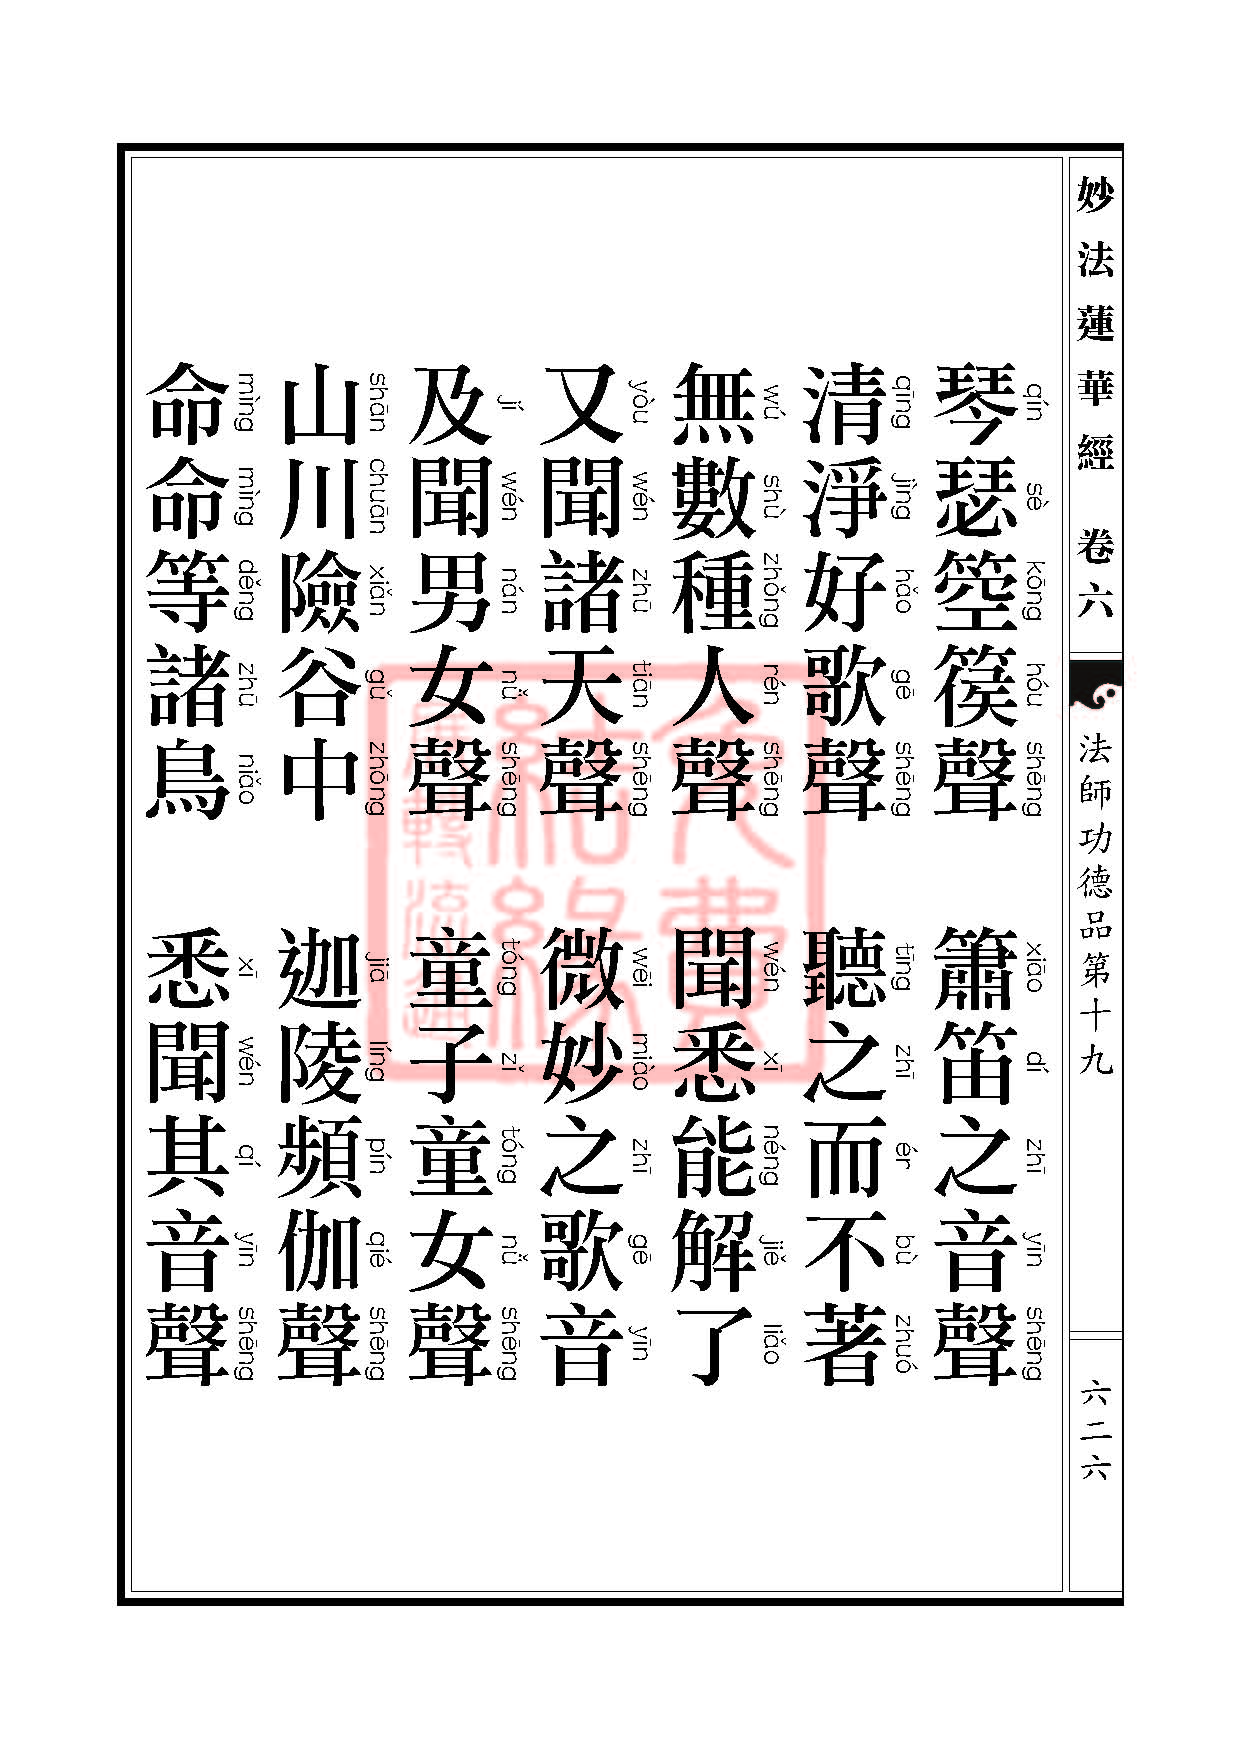 Book_FHJ_HK-A6-PY_Web__626.jpg